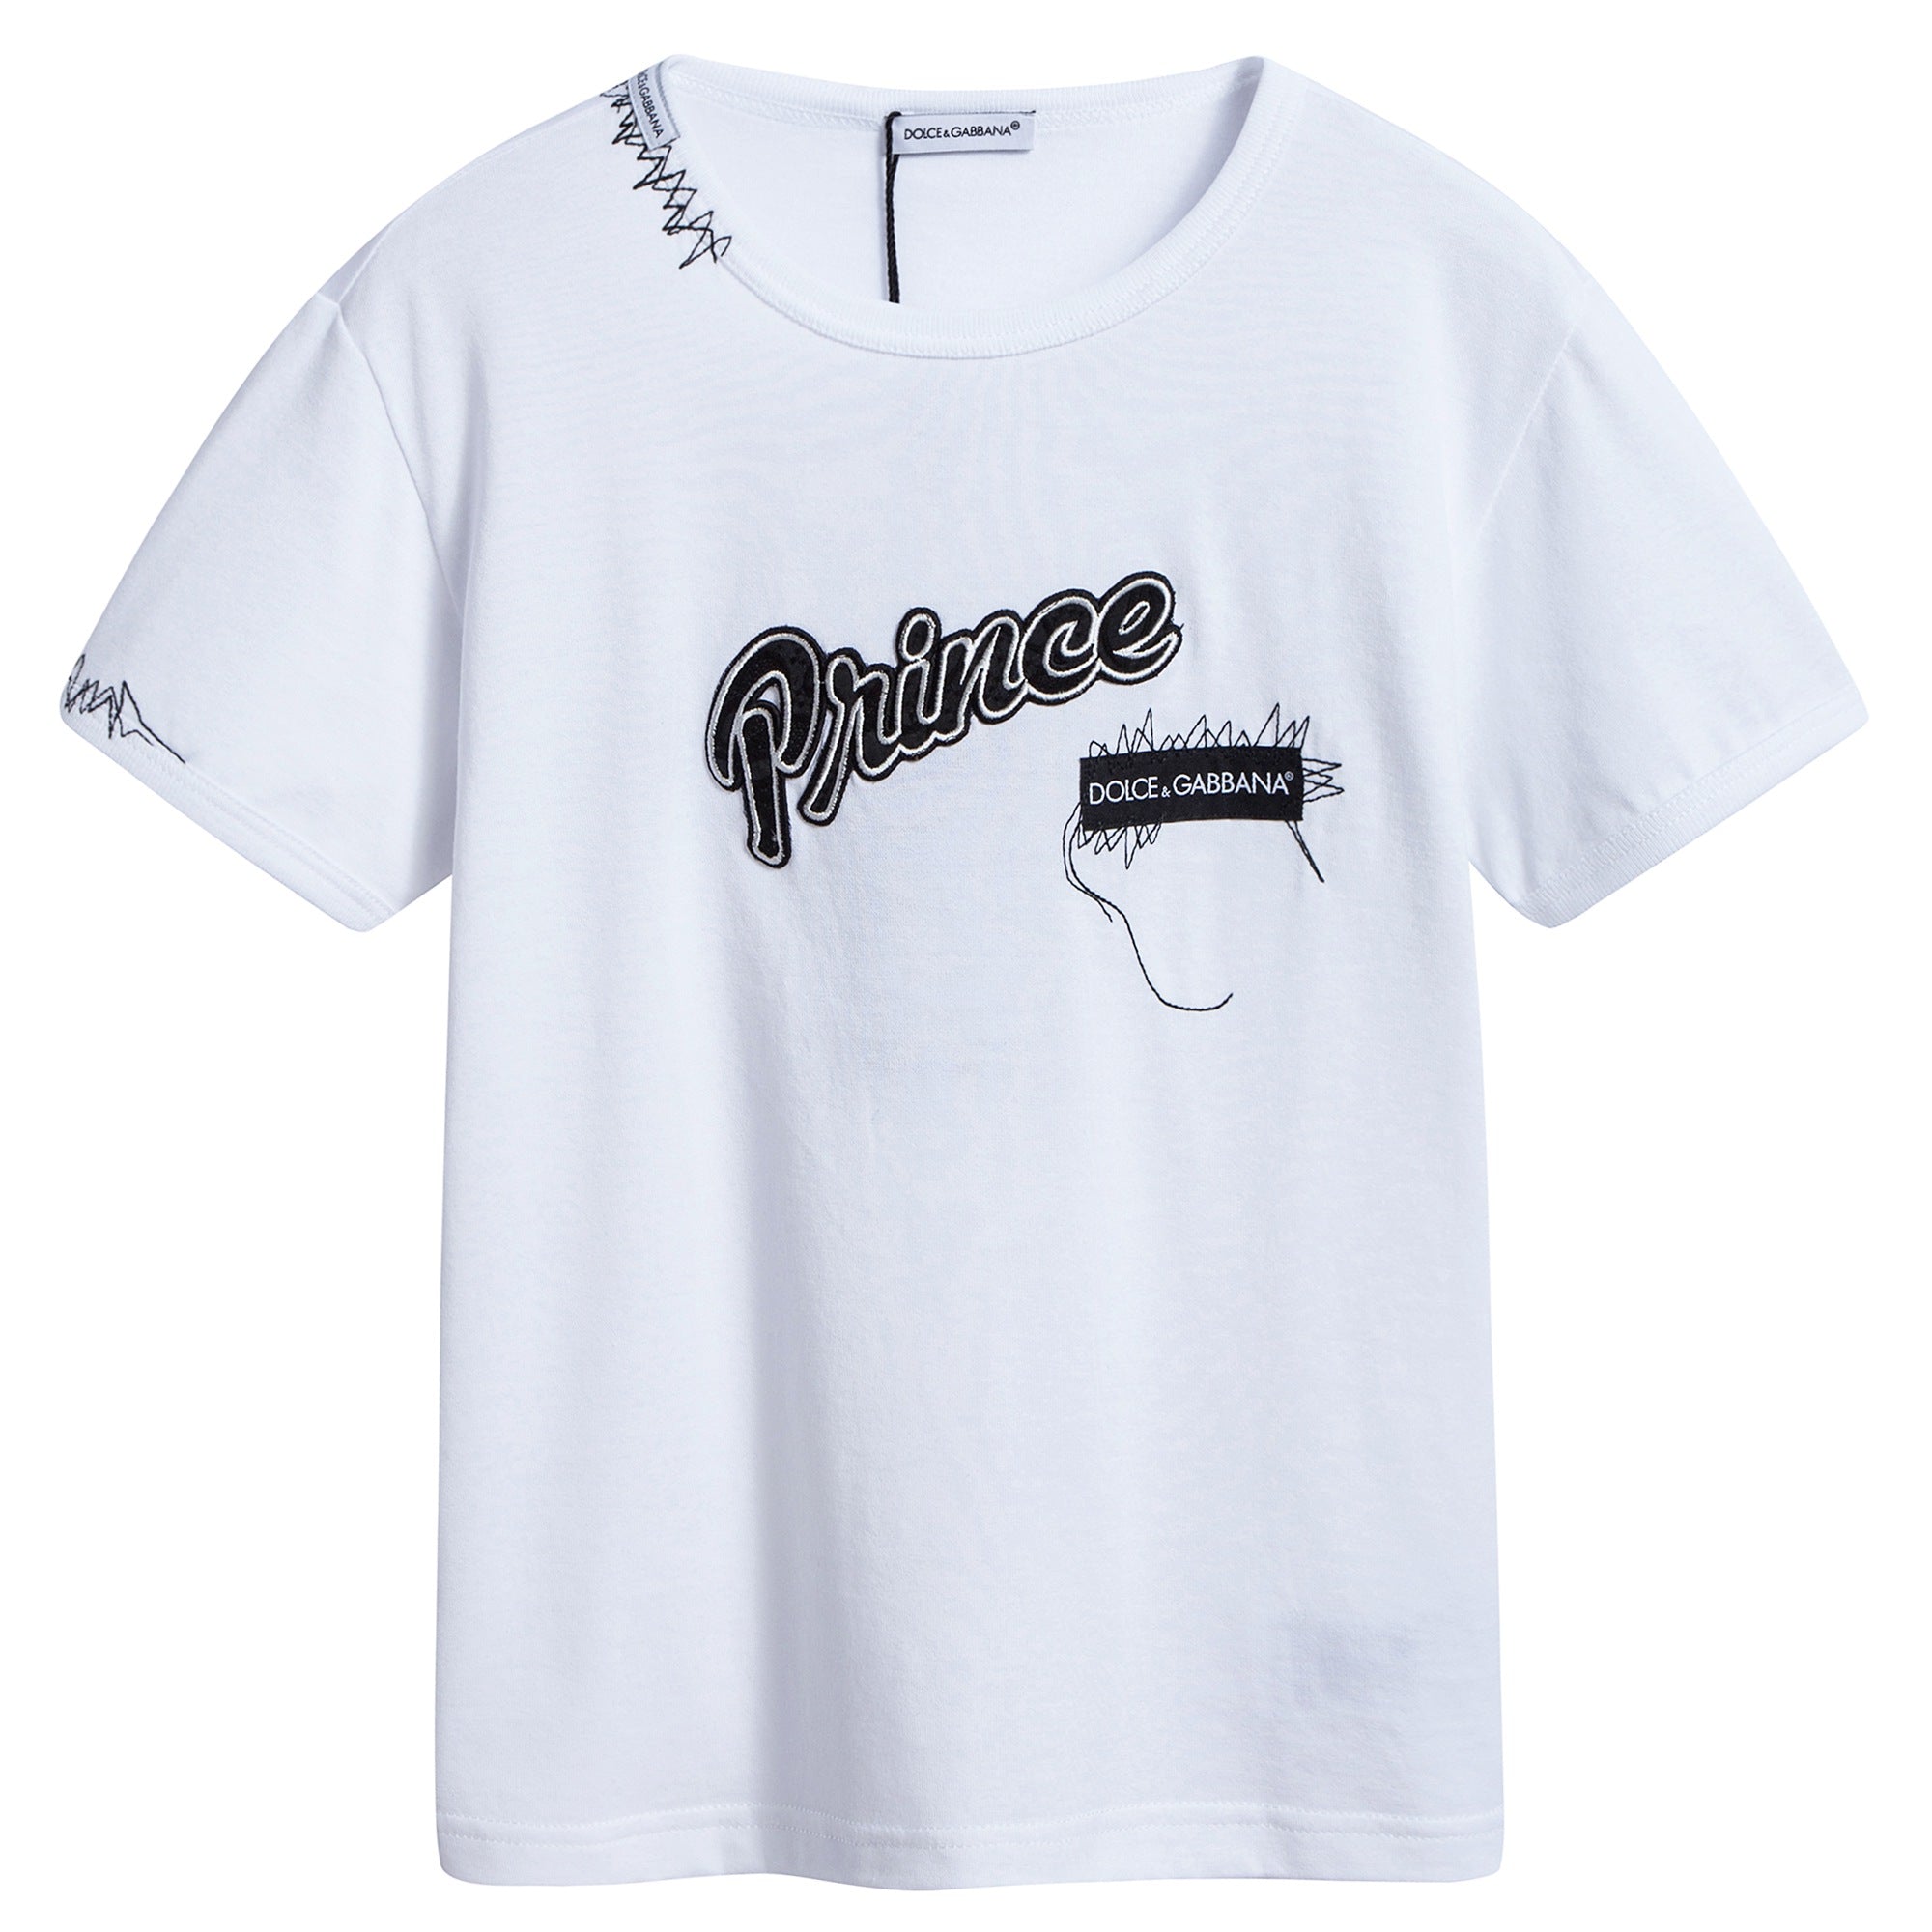 Girls & Boys White Cotton "Pninee" T-shirt